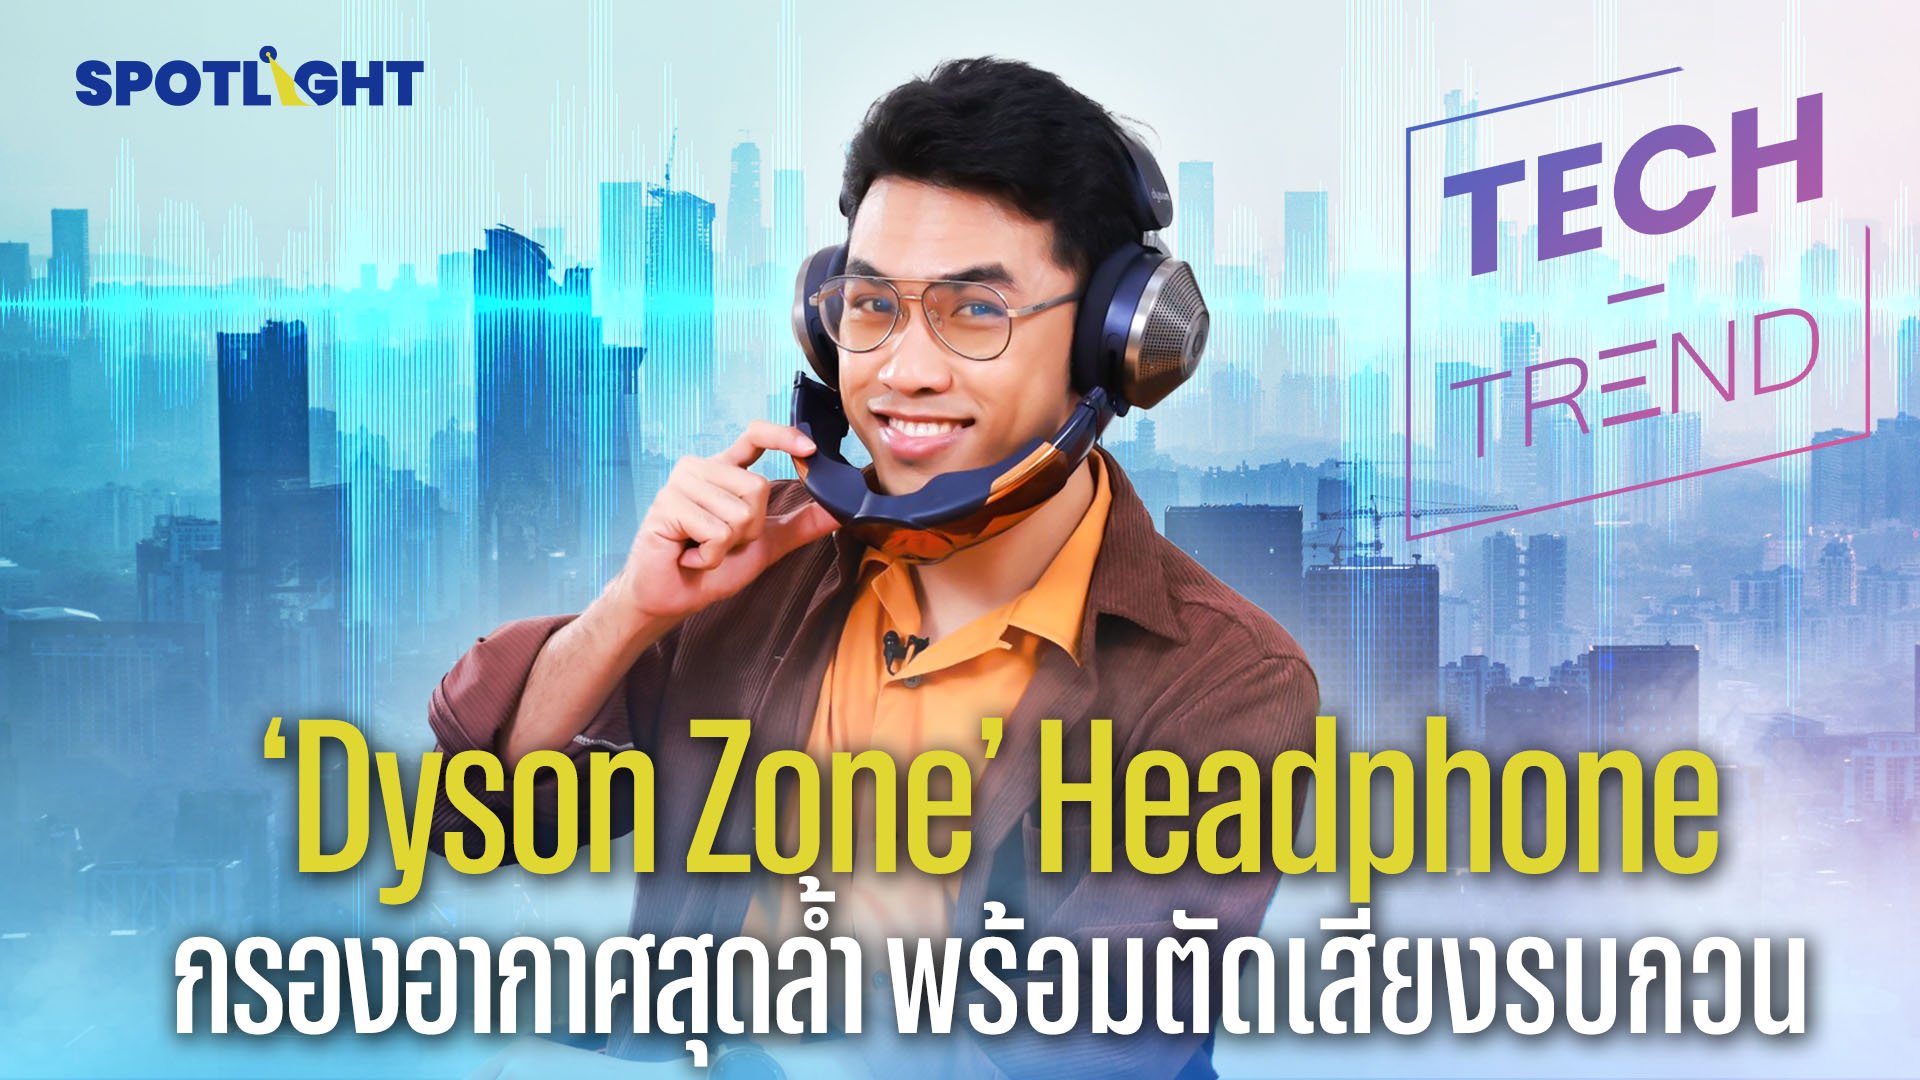 ‘Dyson Zone’ Headphone กรองอากาศสุดล้ำ พร้อมตัดเสียงรบกวน | Spotlight | 29 ธ.ค. 66 | AMARIN TVHD34